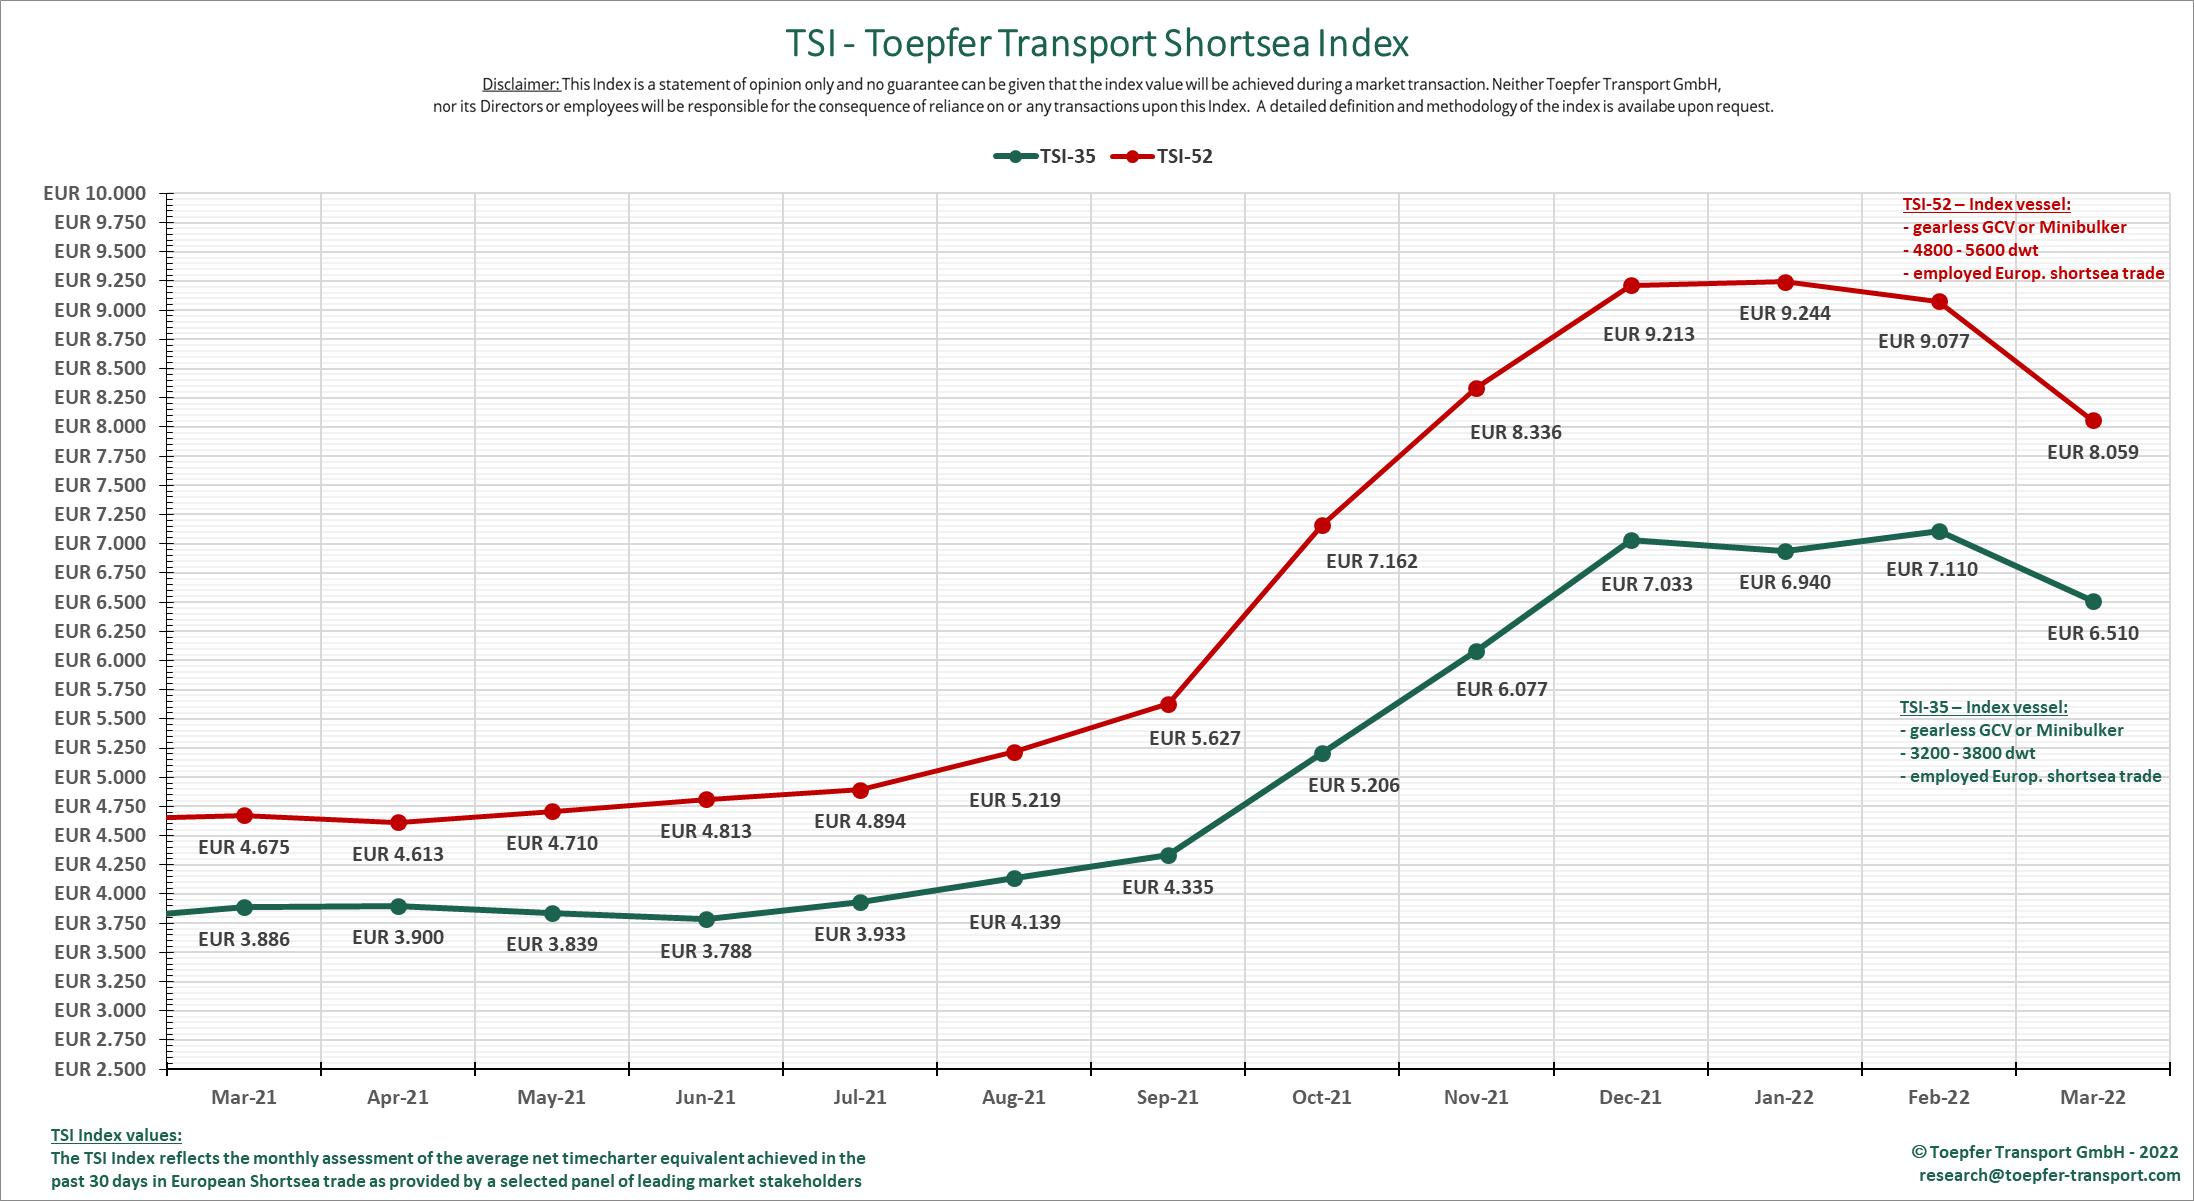 Toepfer Transport: high bunker prices cut shortsea vessel earnings